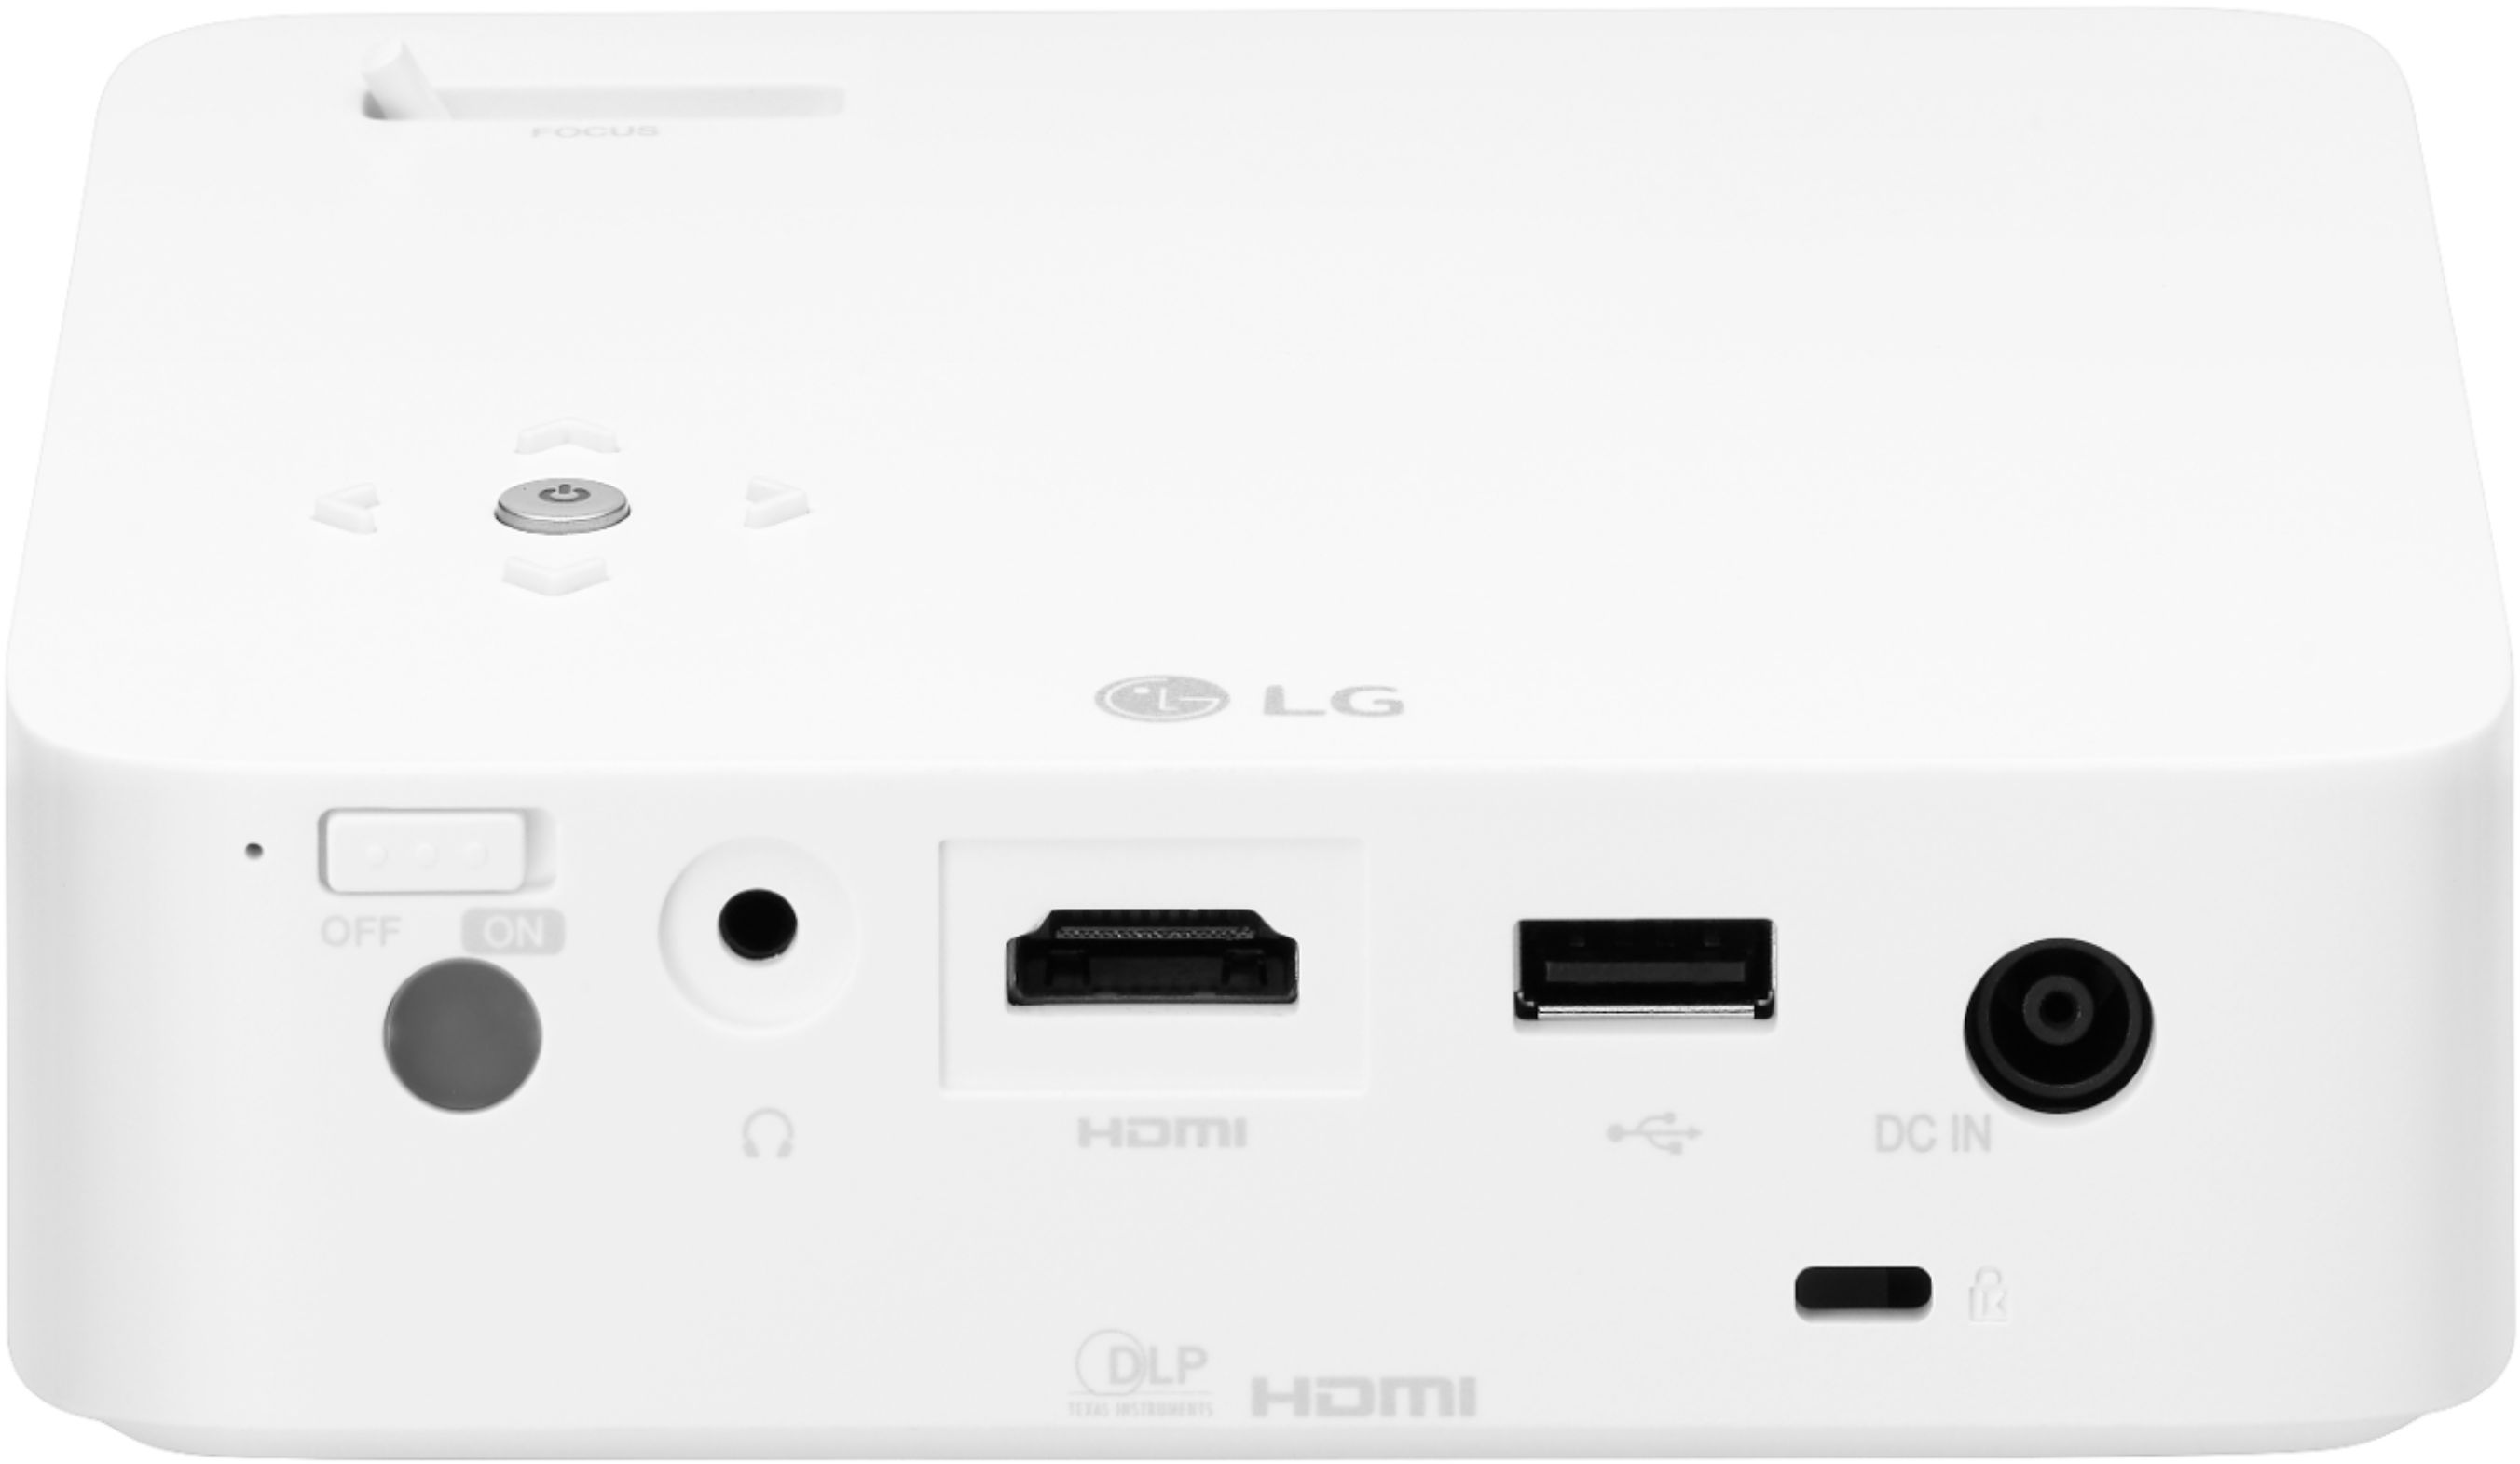 Back View: Hisense - Smart Dual Color Laser TV 120L10E 4K Wireless DLP Projector with High Dynamic Range - Black